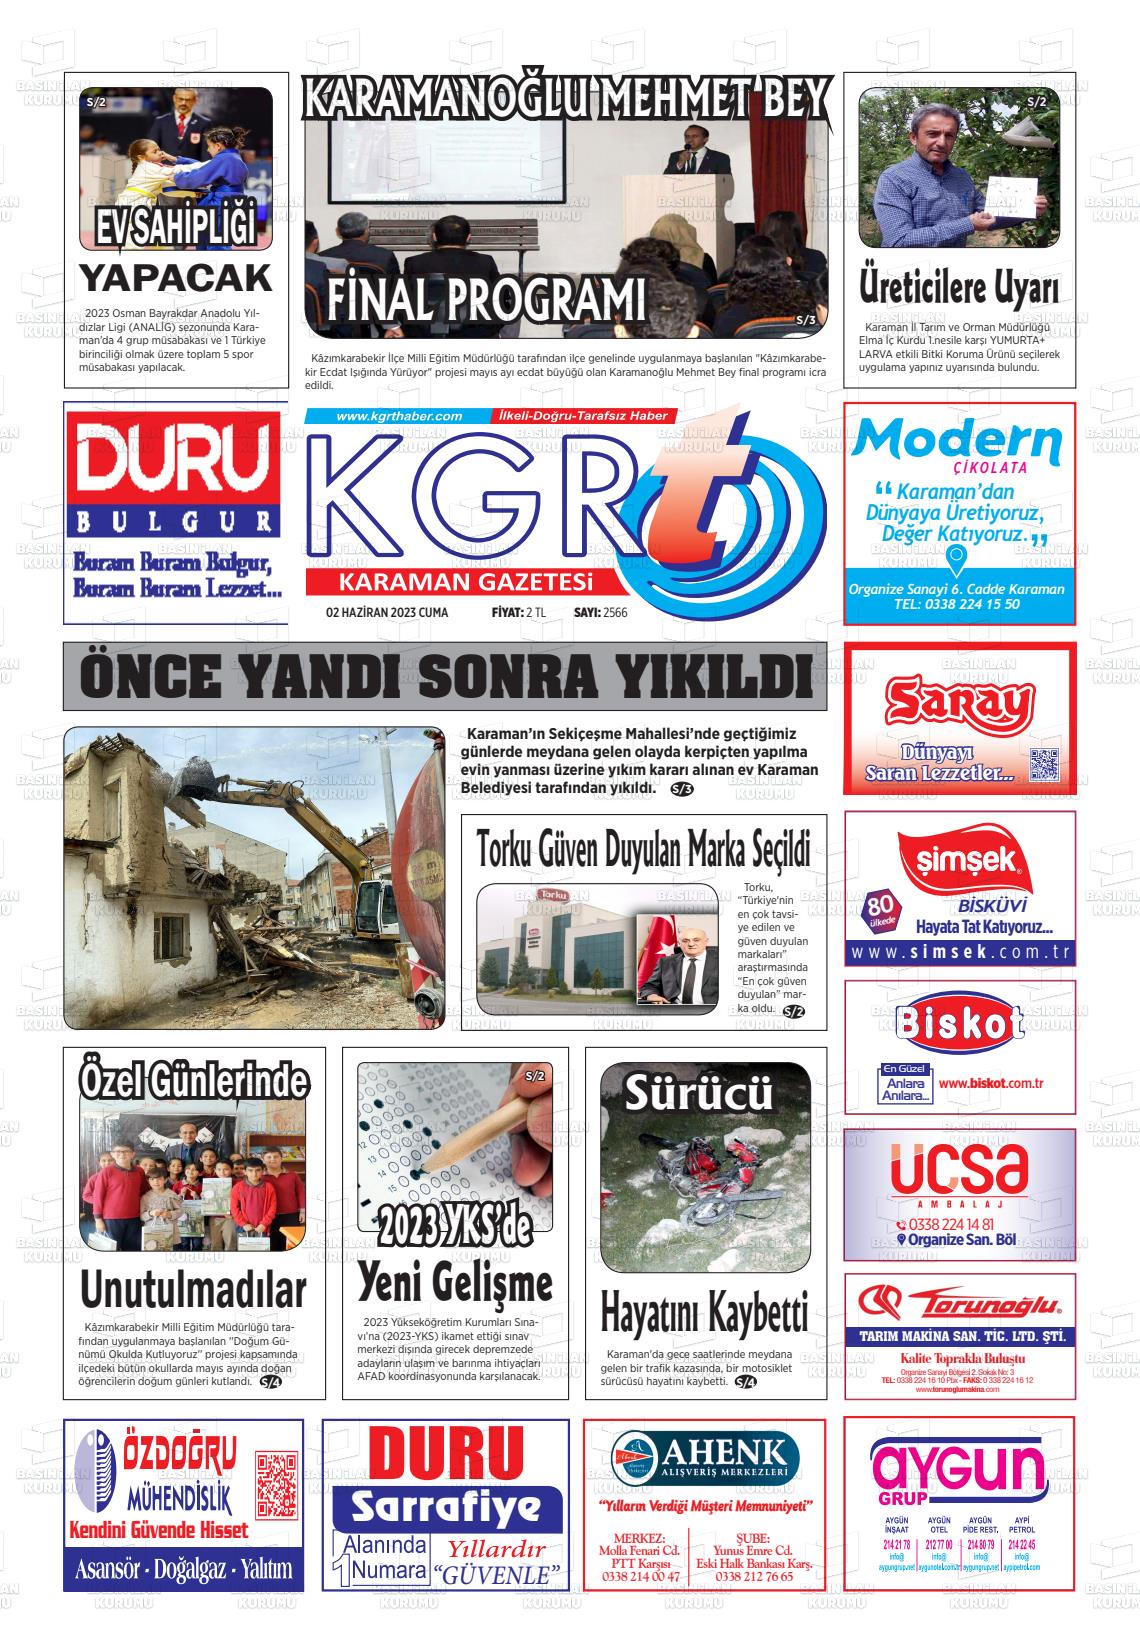 02 Haziran 2023 Kgrt Karaman Gazete Manşeti